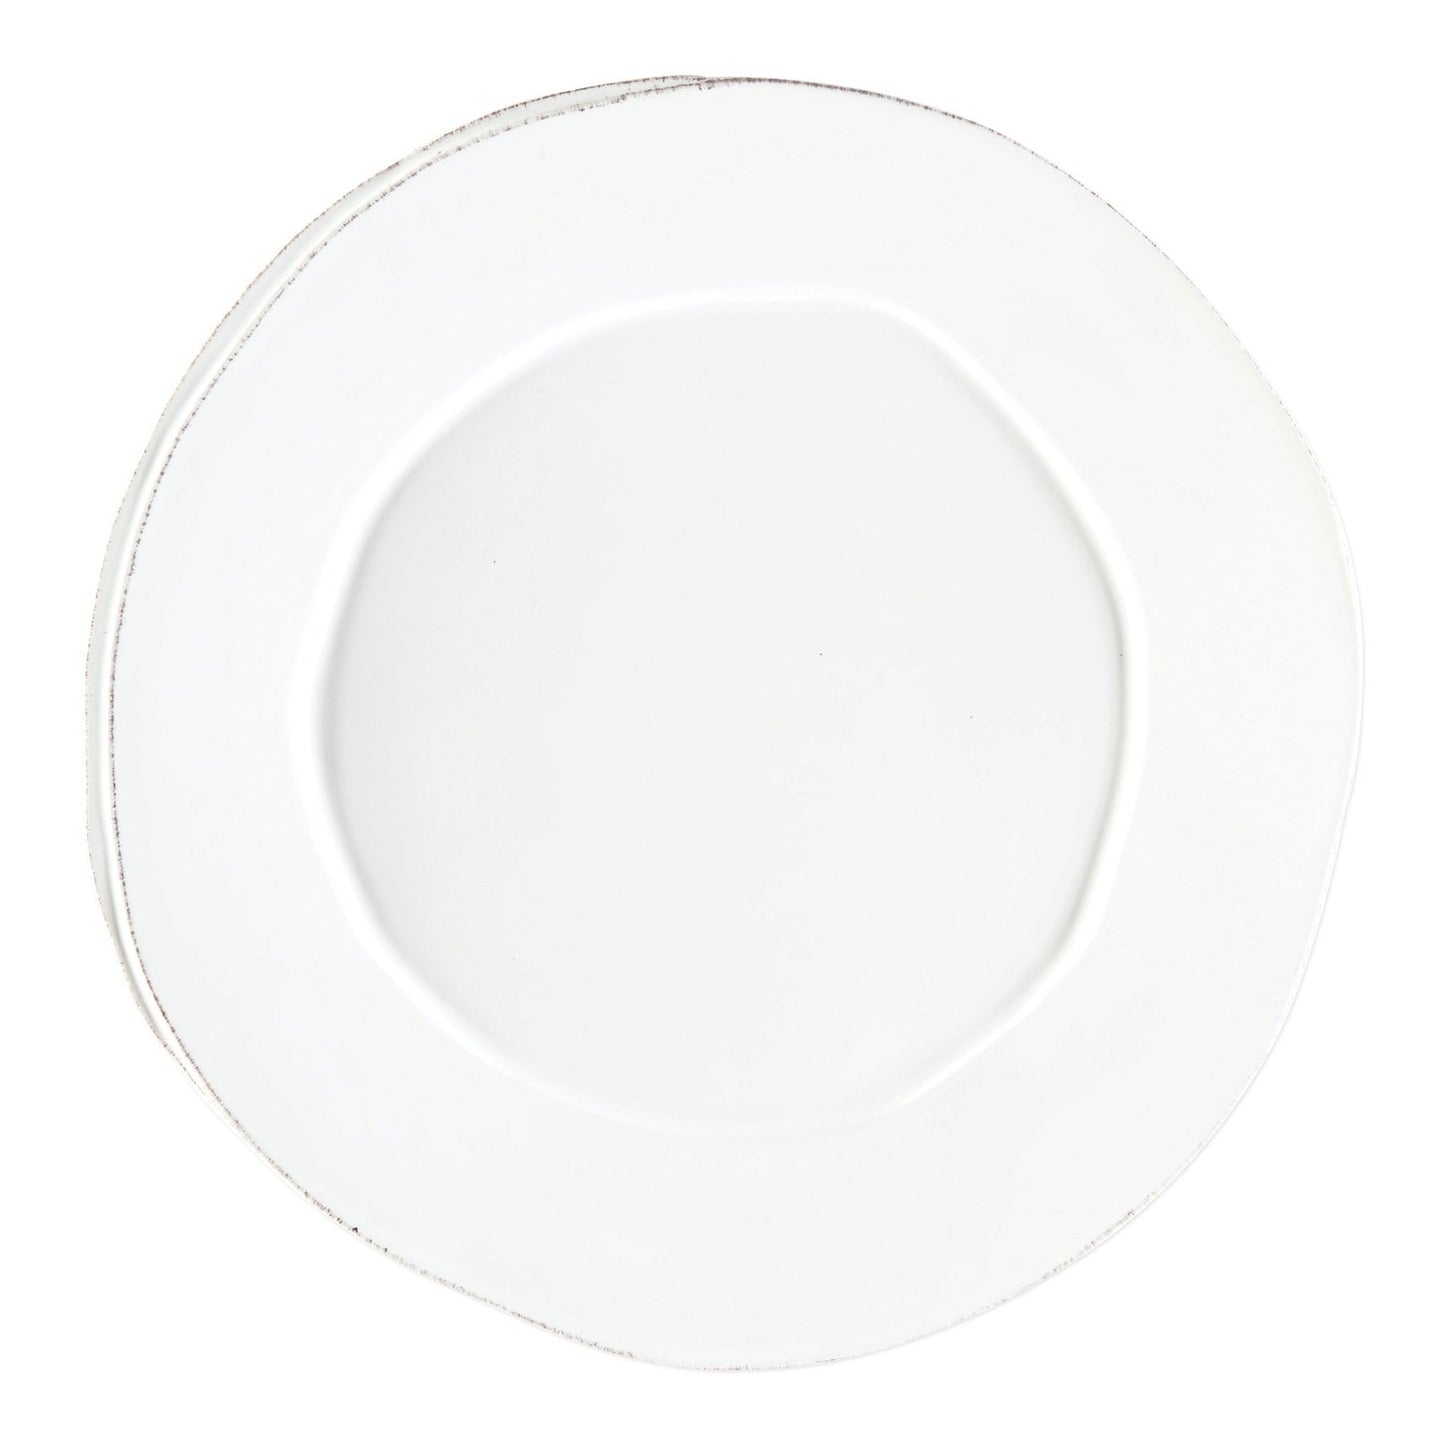 round white plater on white background.